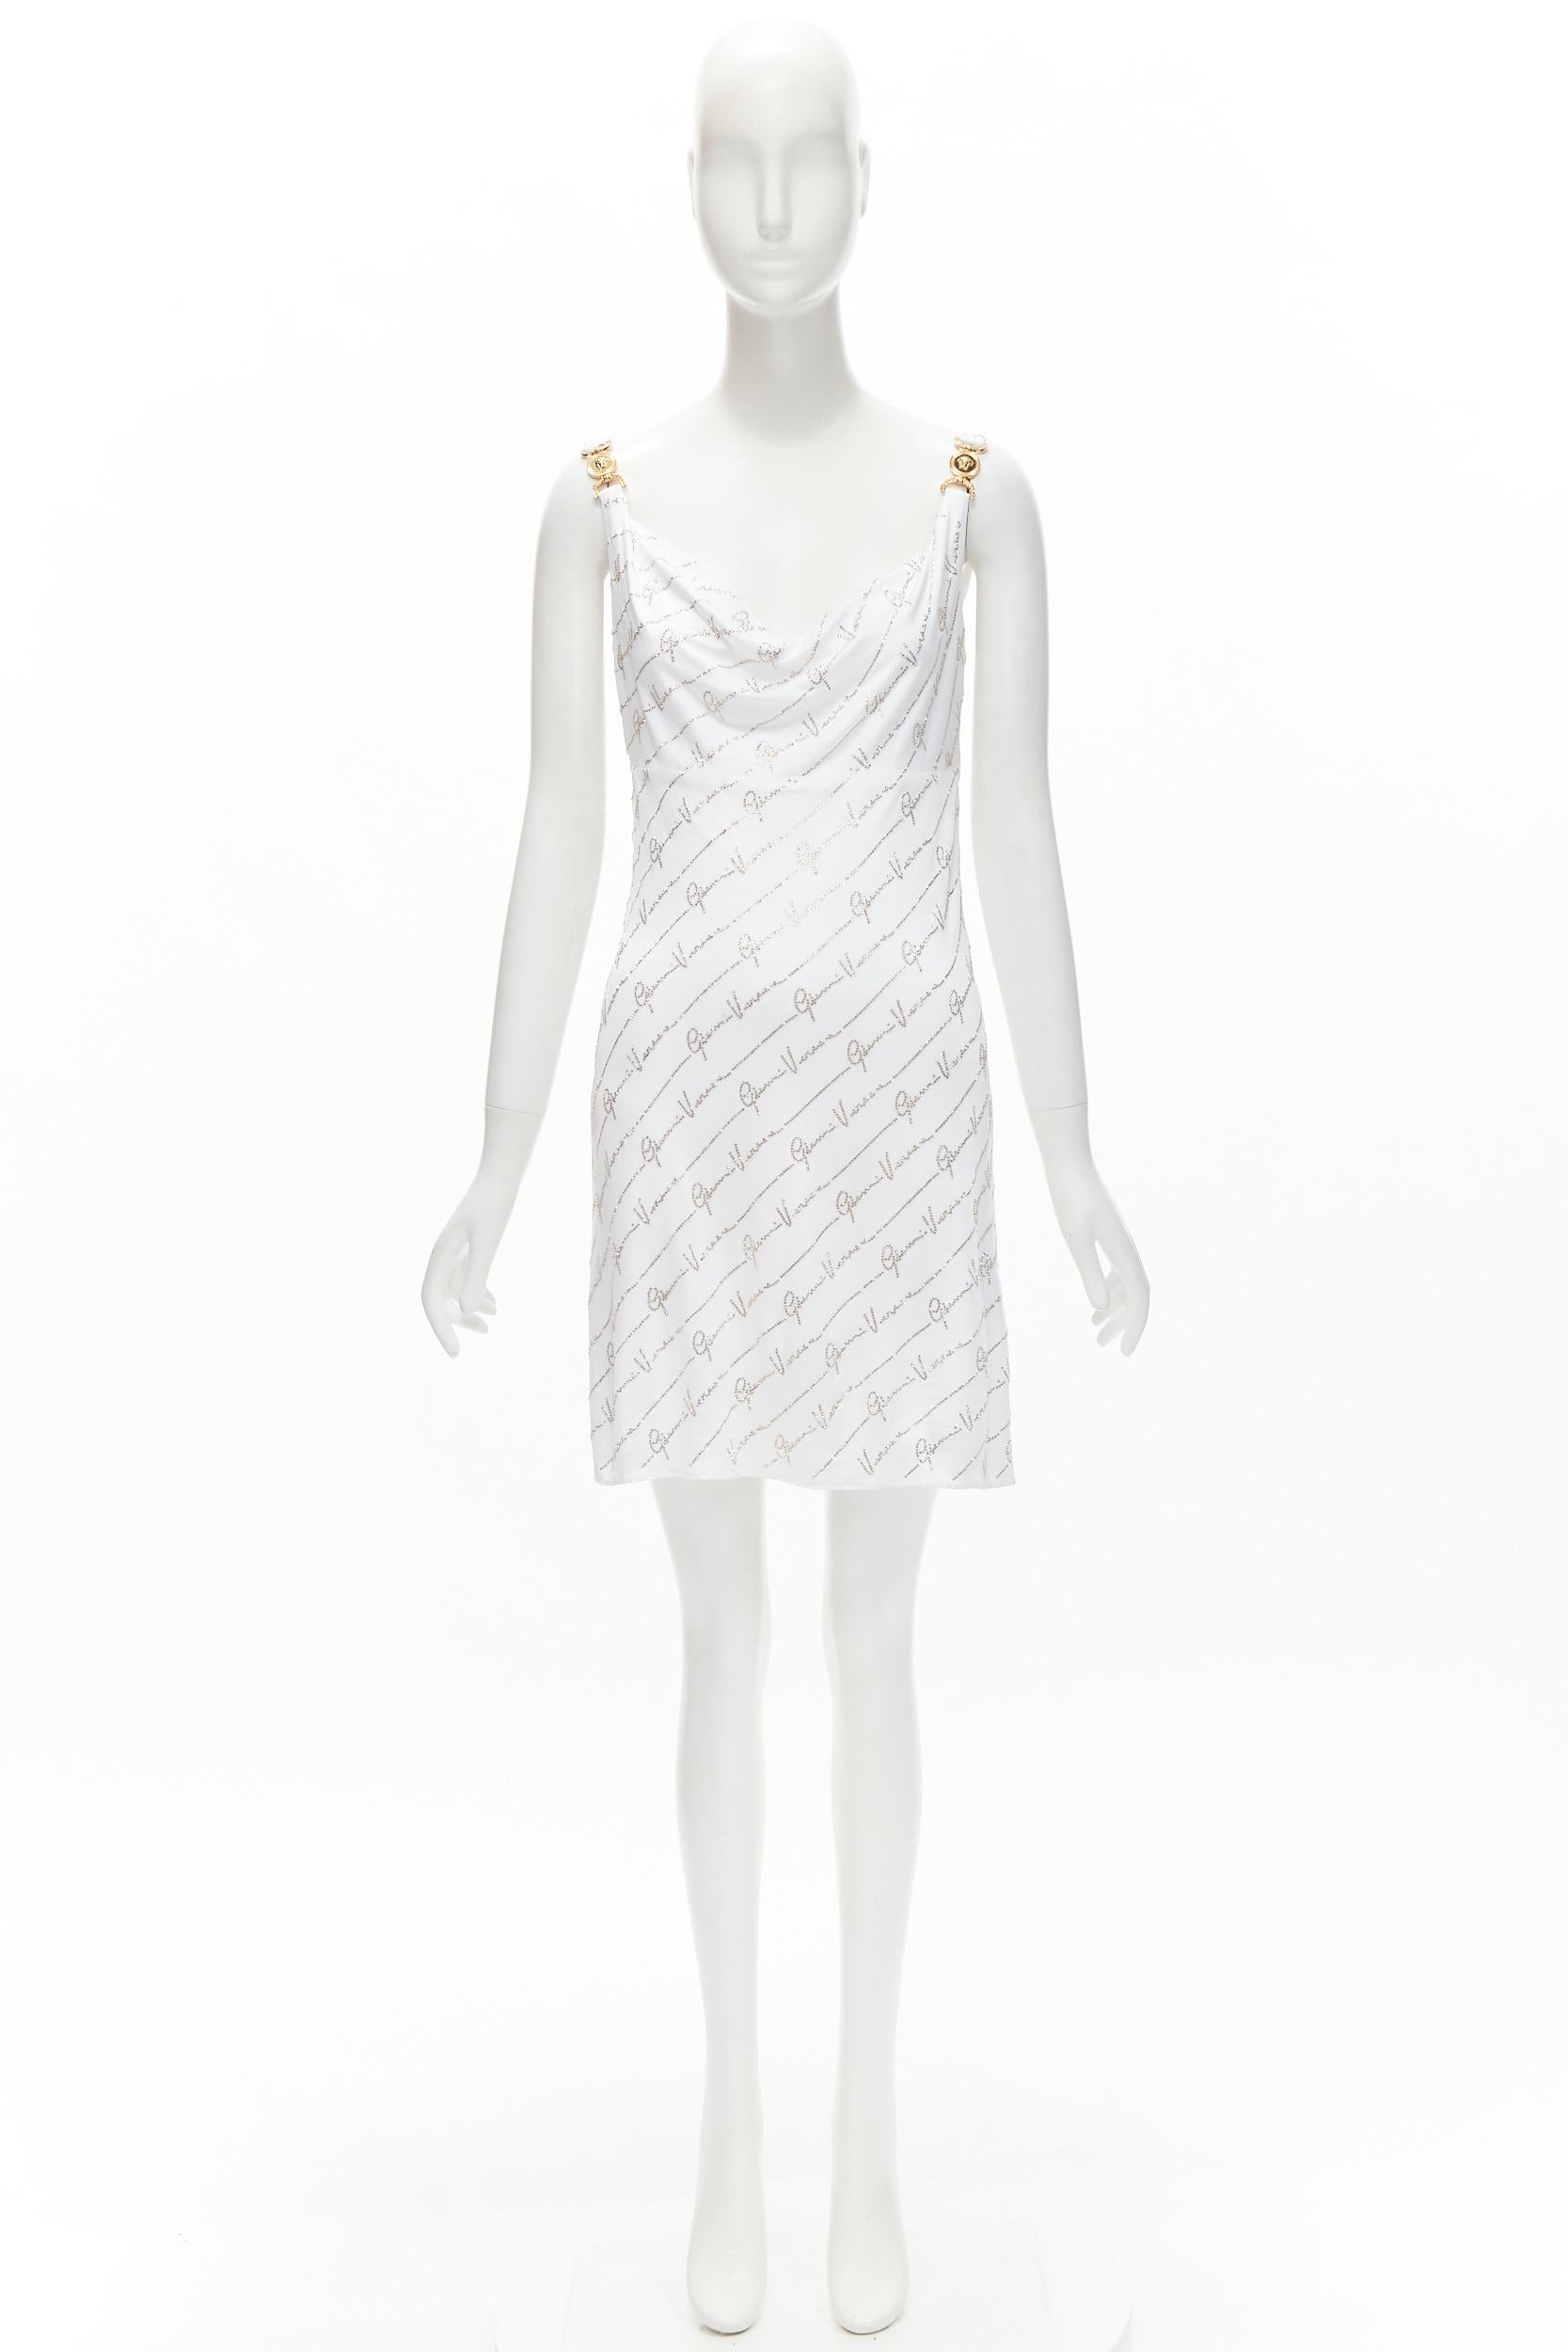 Versace - Robe Medusa incrustée de cristaux blancs incrustés, signature Gianni, taille IT 44 L, état neuf en vente 4